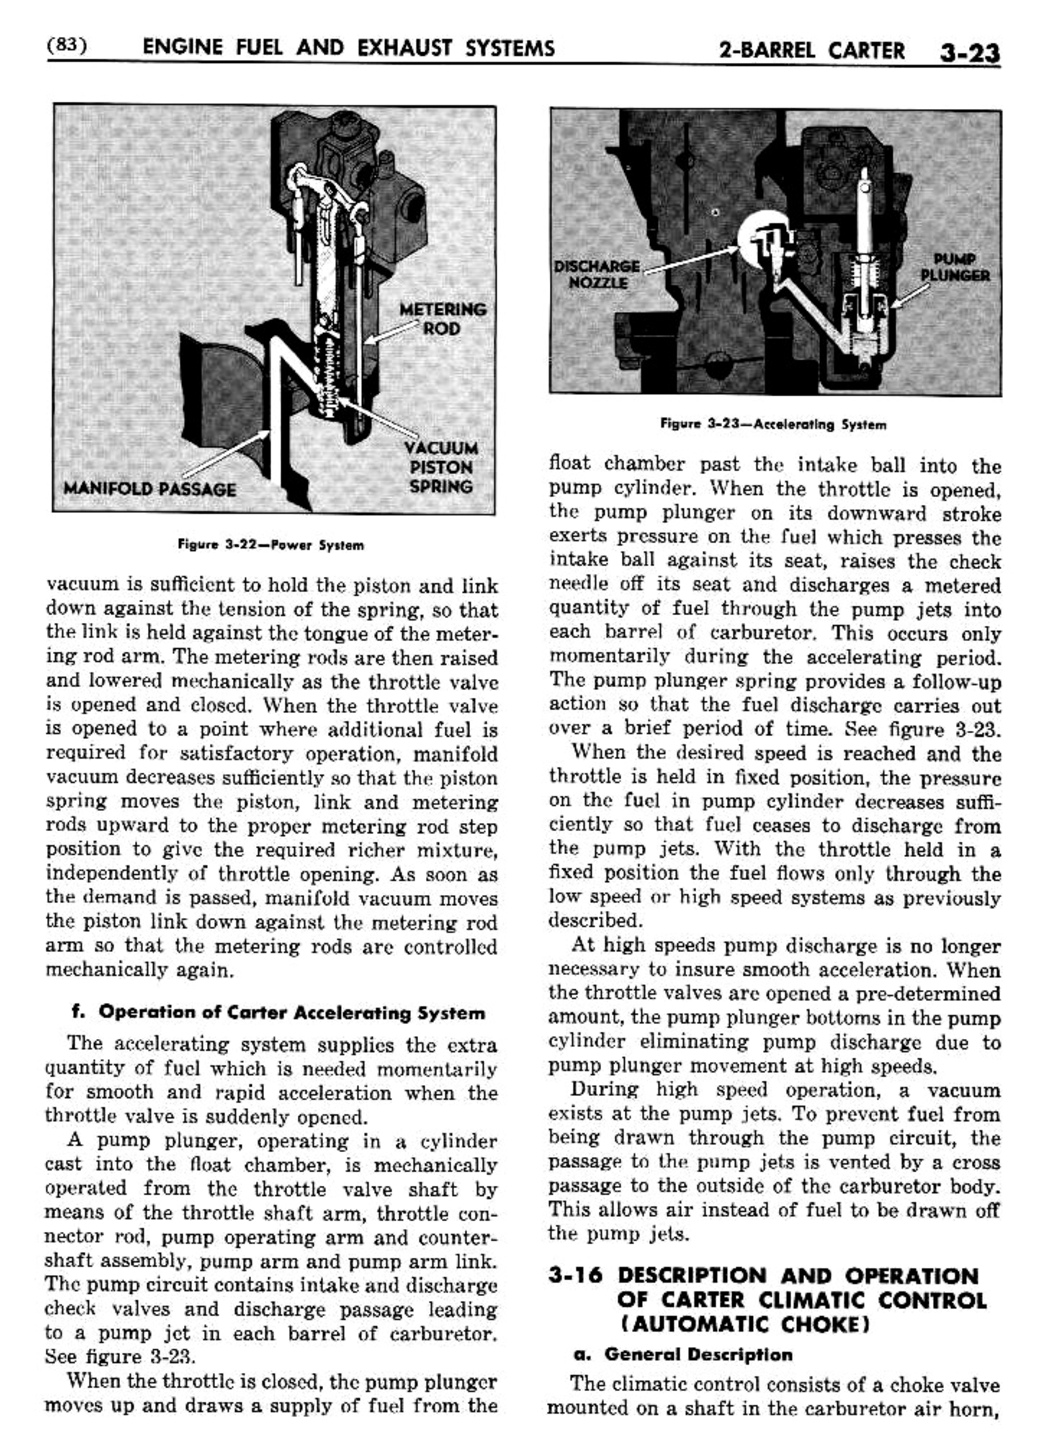 n_04 1956 Buick Shop Manual - Engine Fuel & Exhaust-023-023.jpg